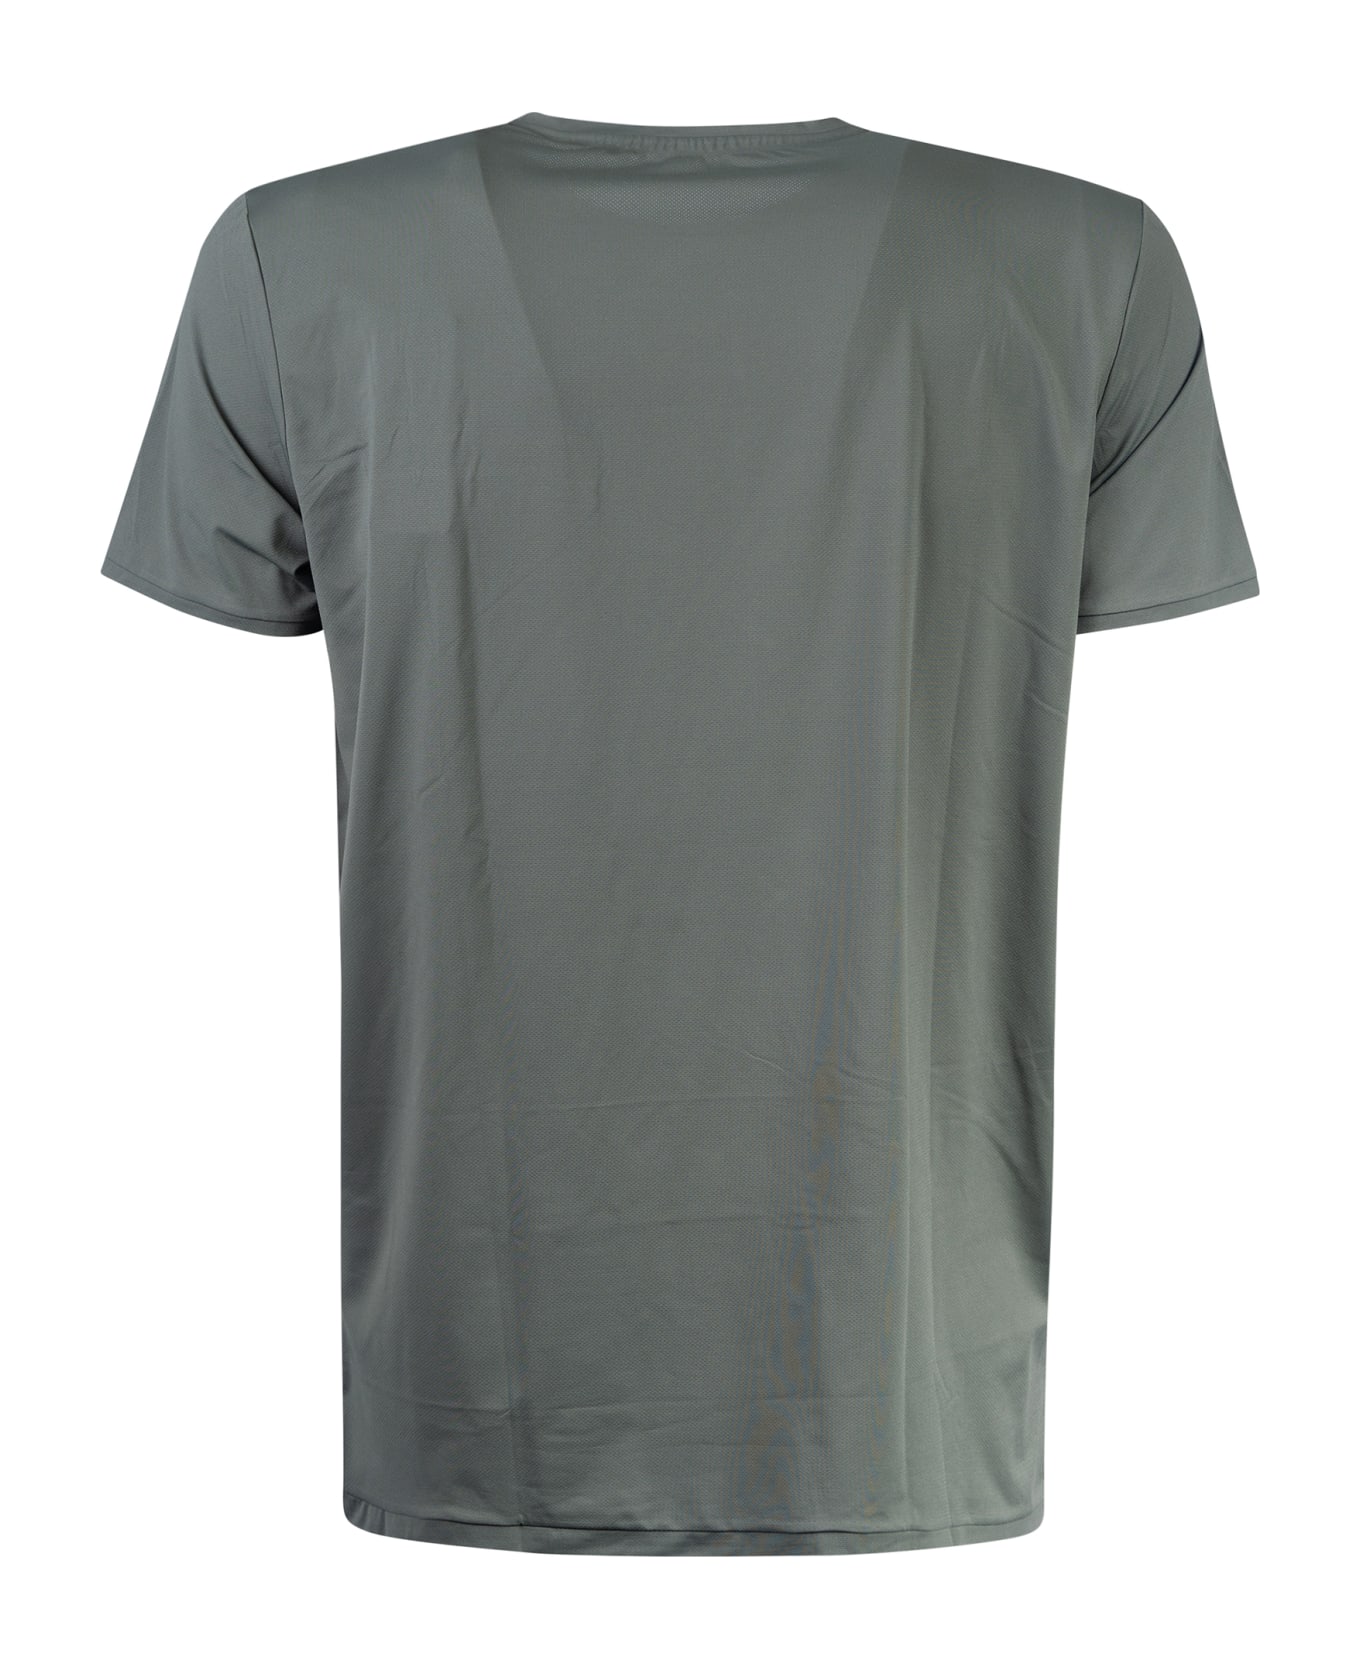 RRD - Roberto Ricci Design Oxford Pocket T-shirt - Bosco